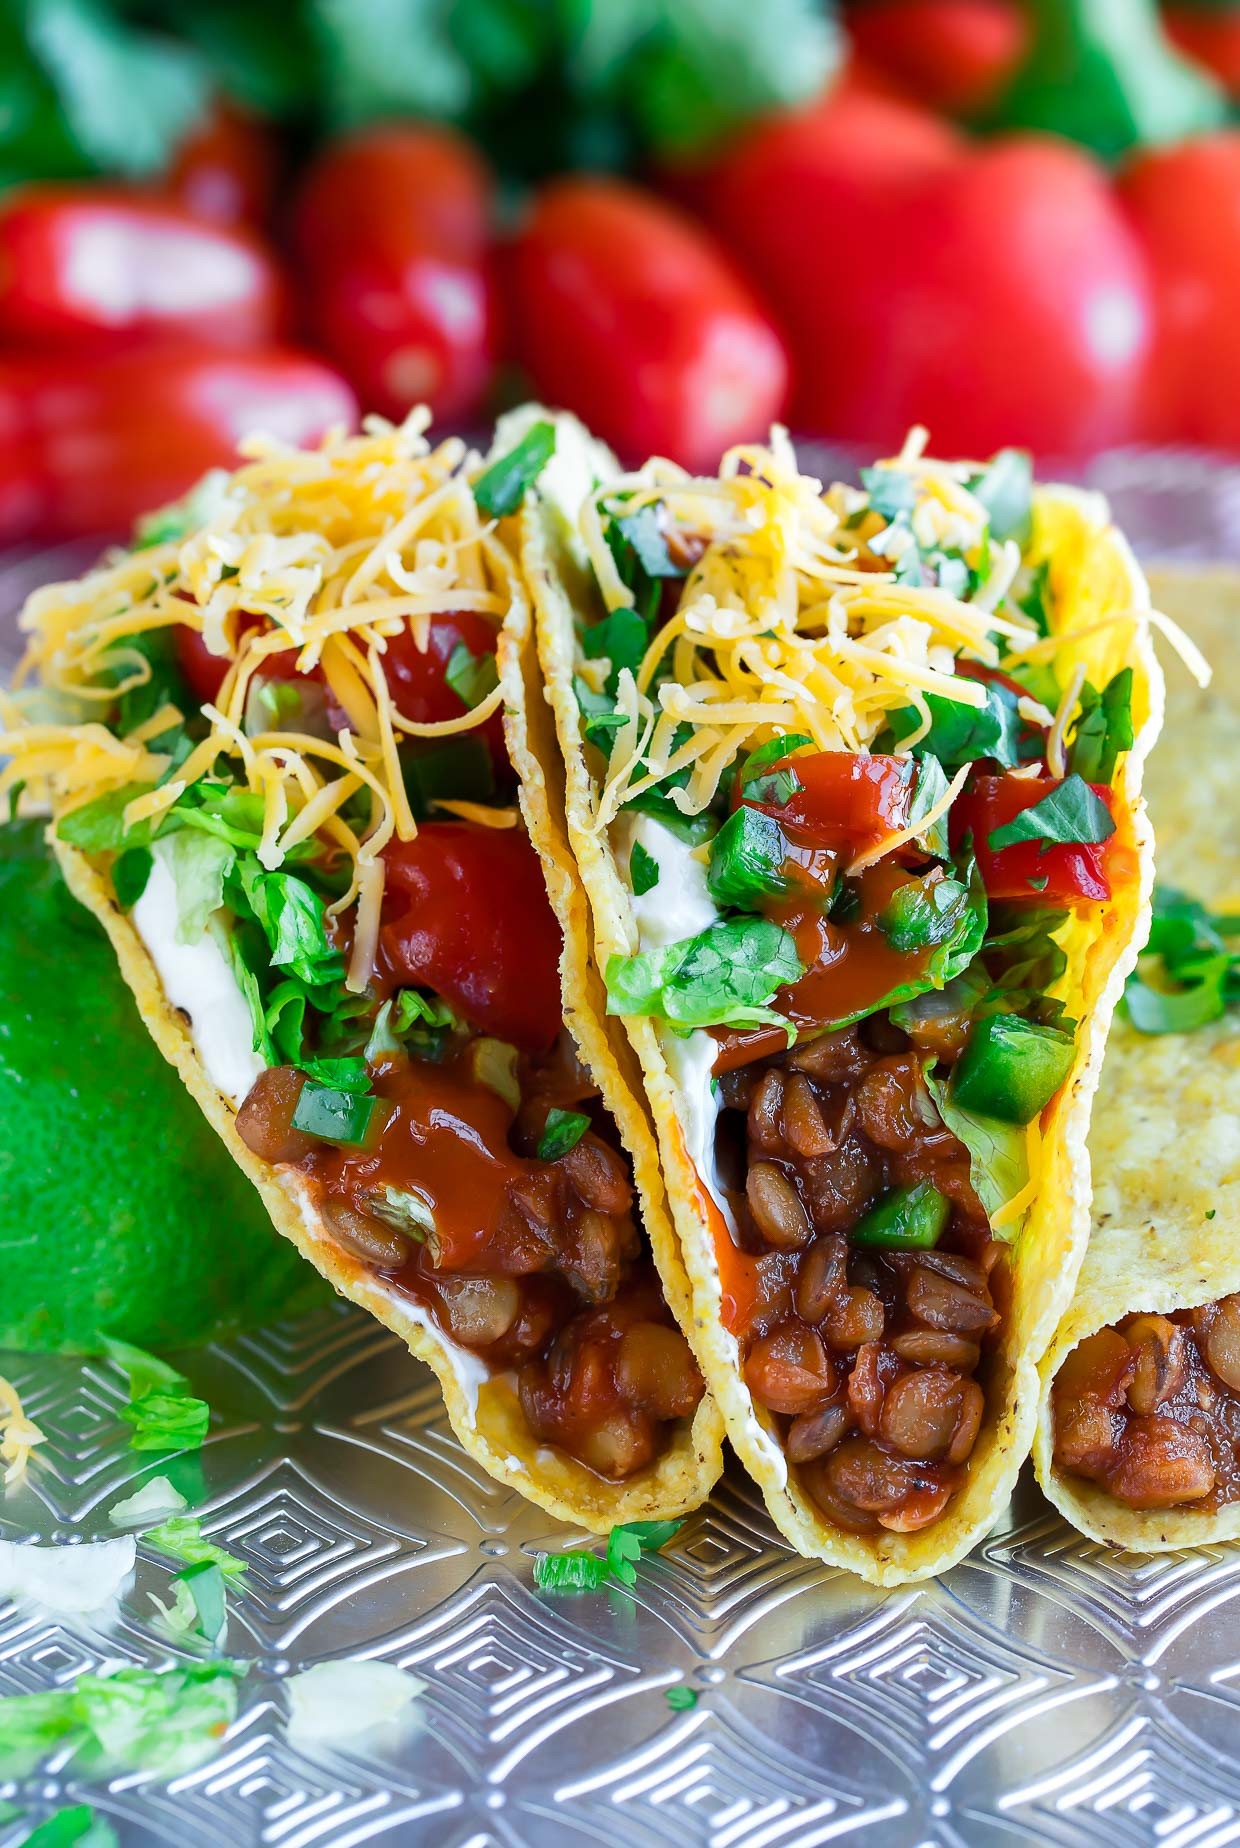 Vegan Tacos Recipes
 Chipotle Lentil Tacos Tasty Ve arian Tacos with Twist